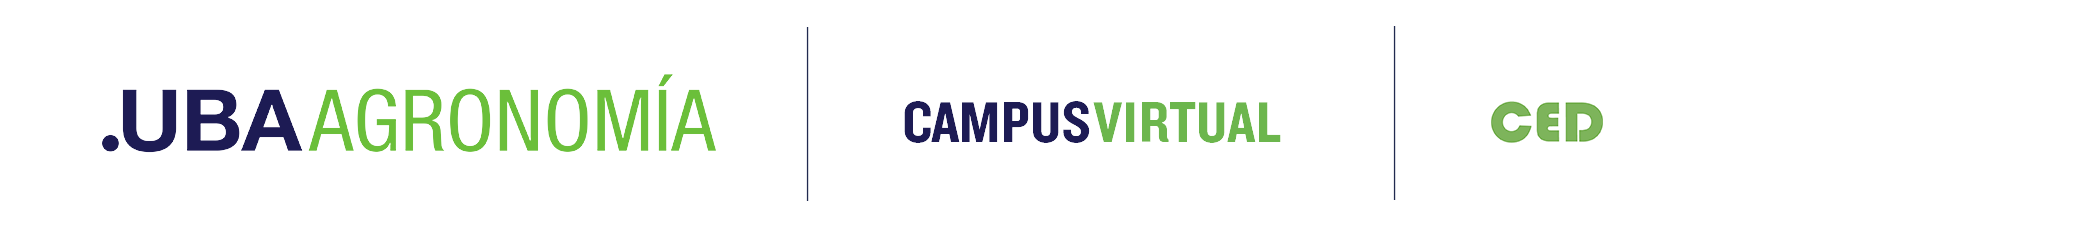 Campus Virtual FAUBA